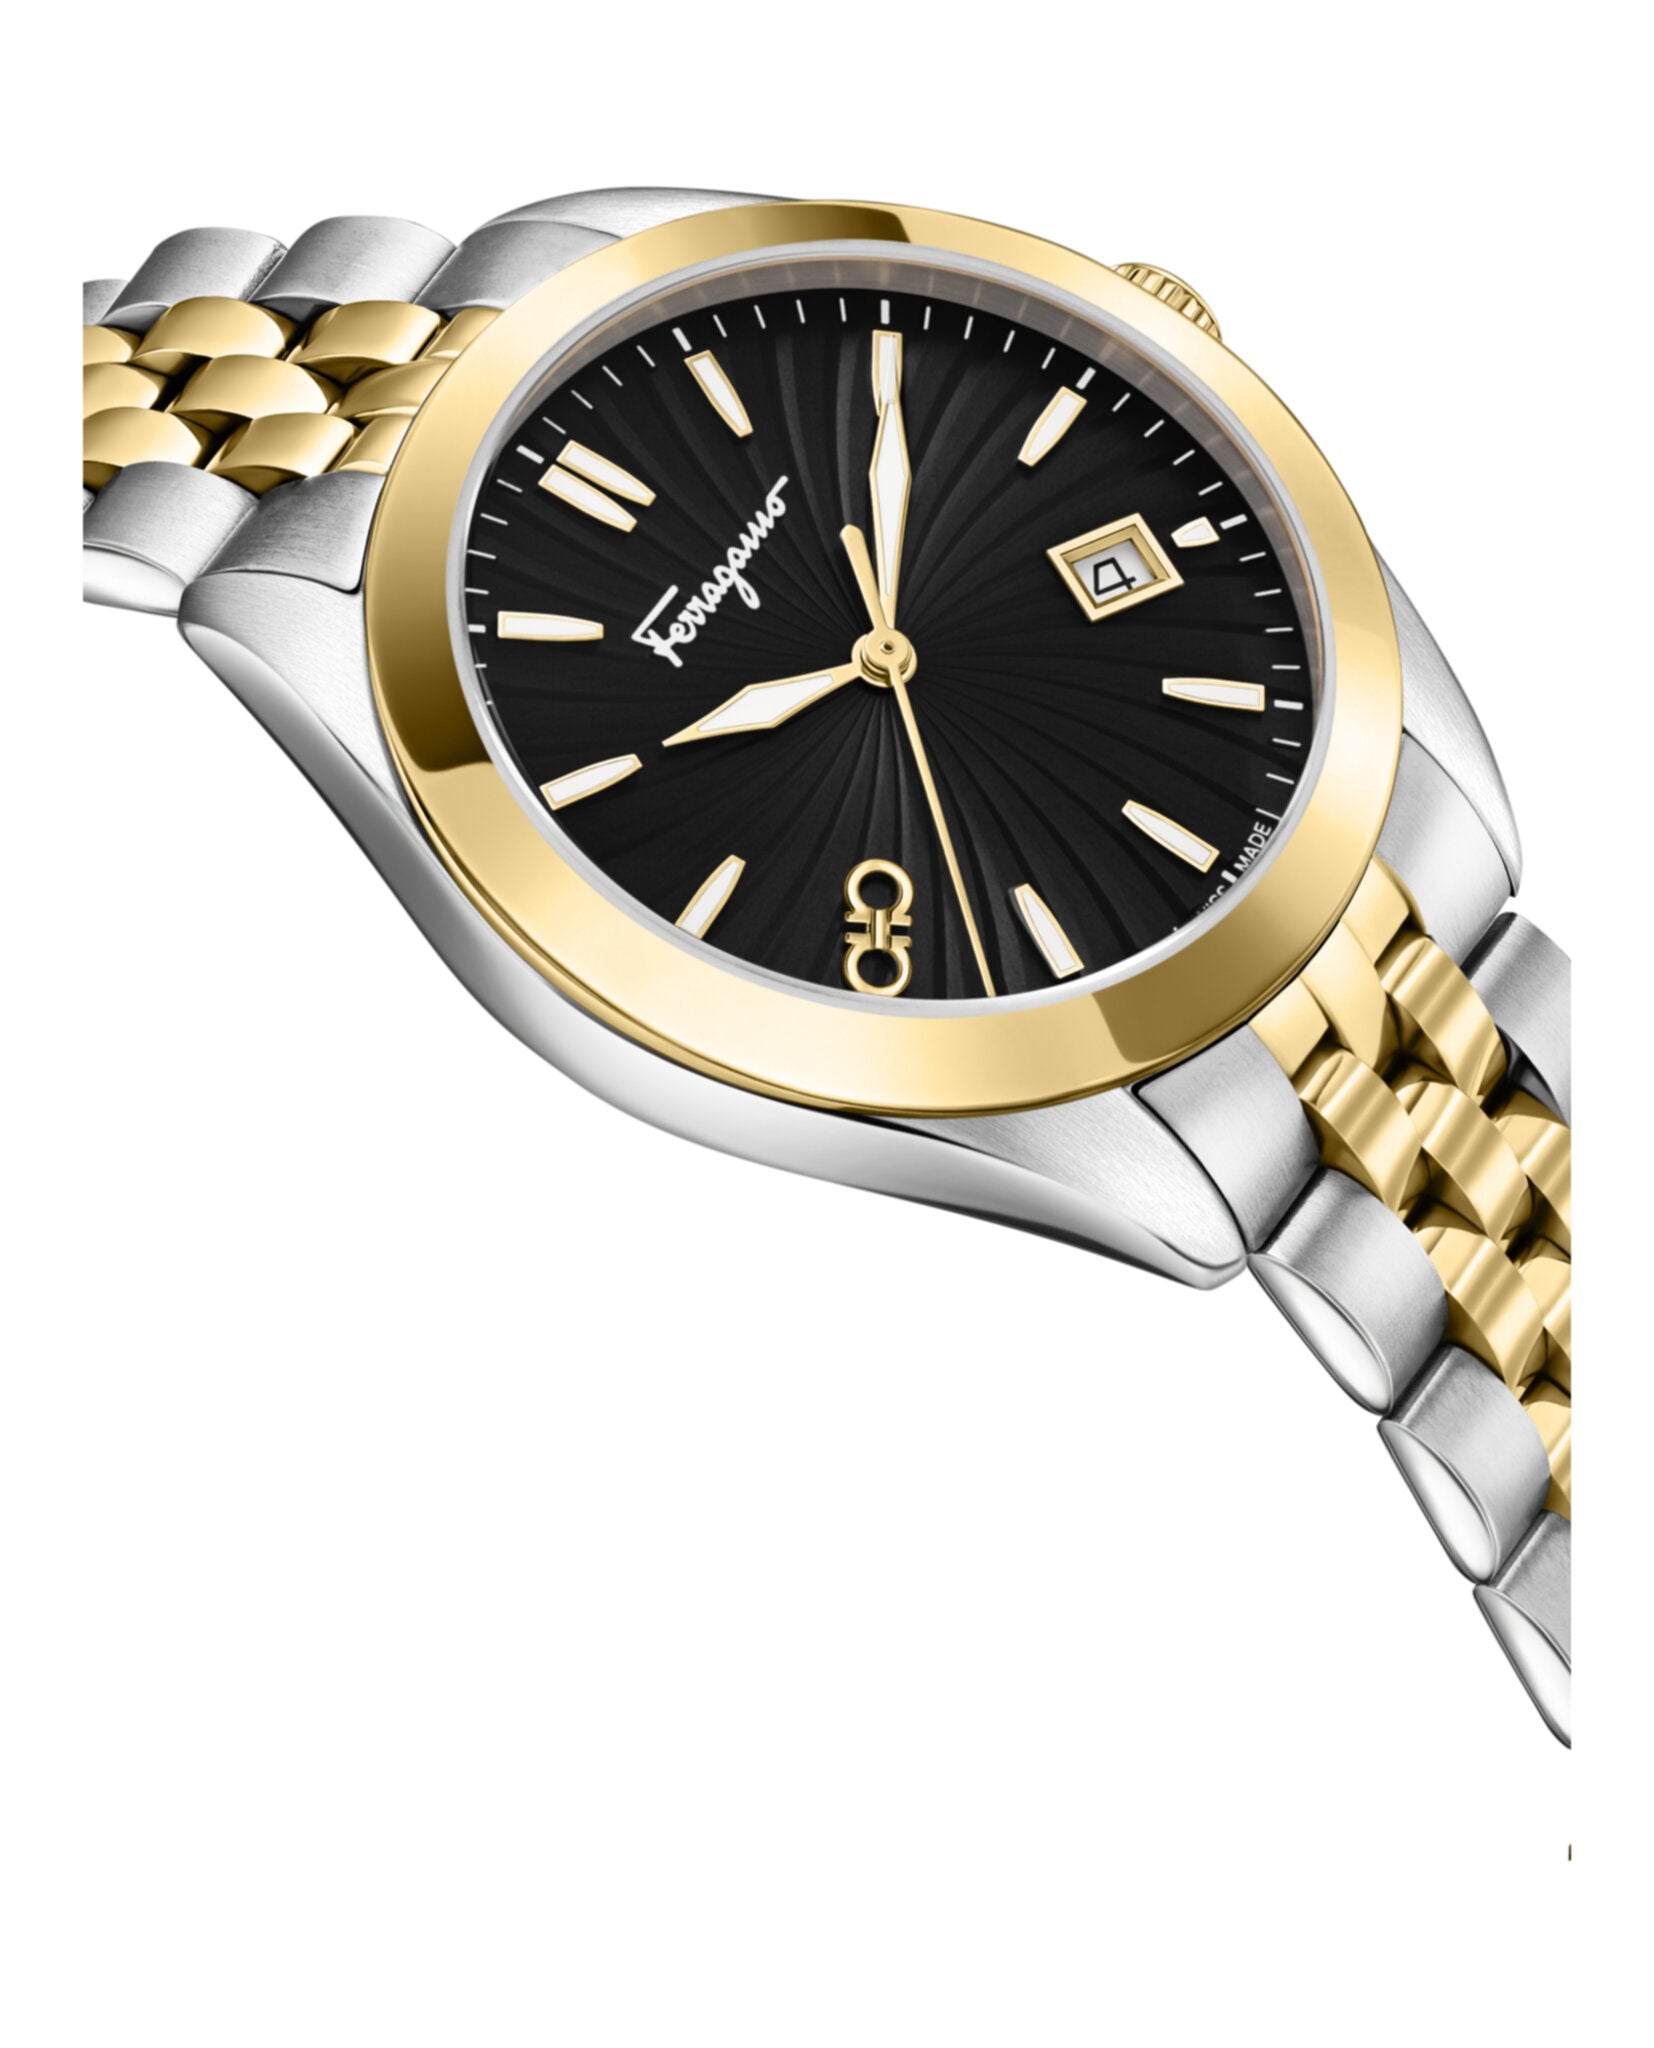 Ferragamo Classic Bracelet Watch